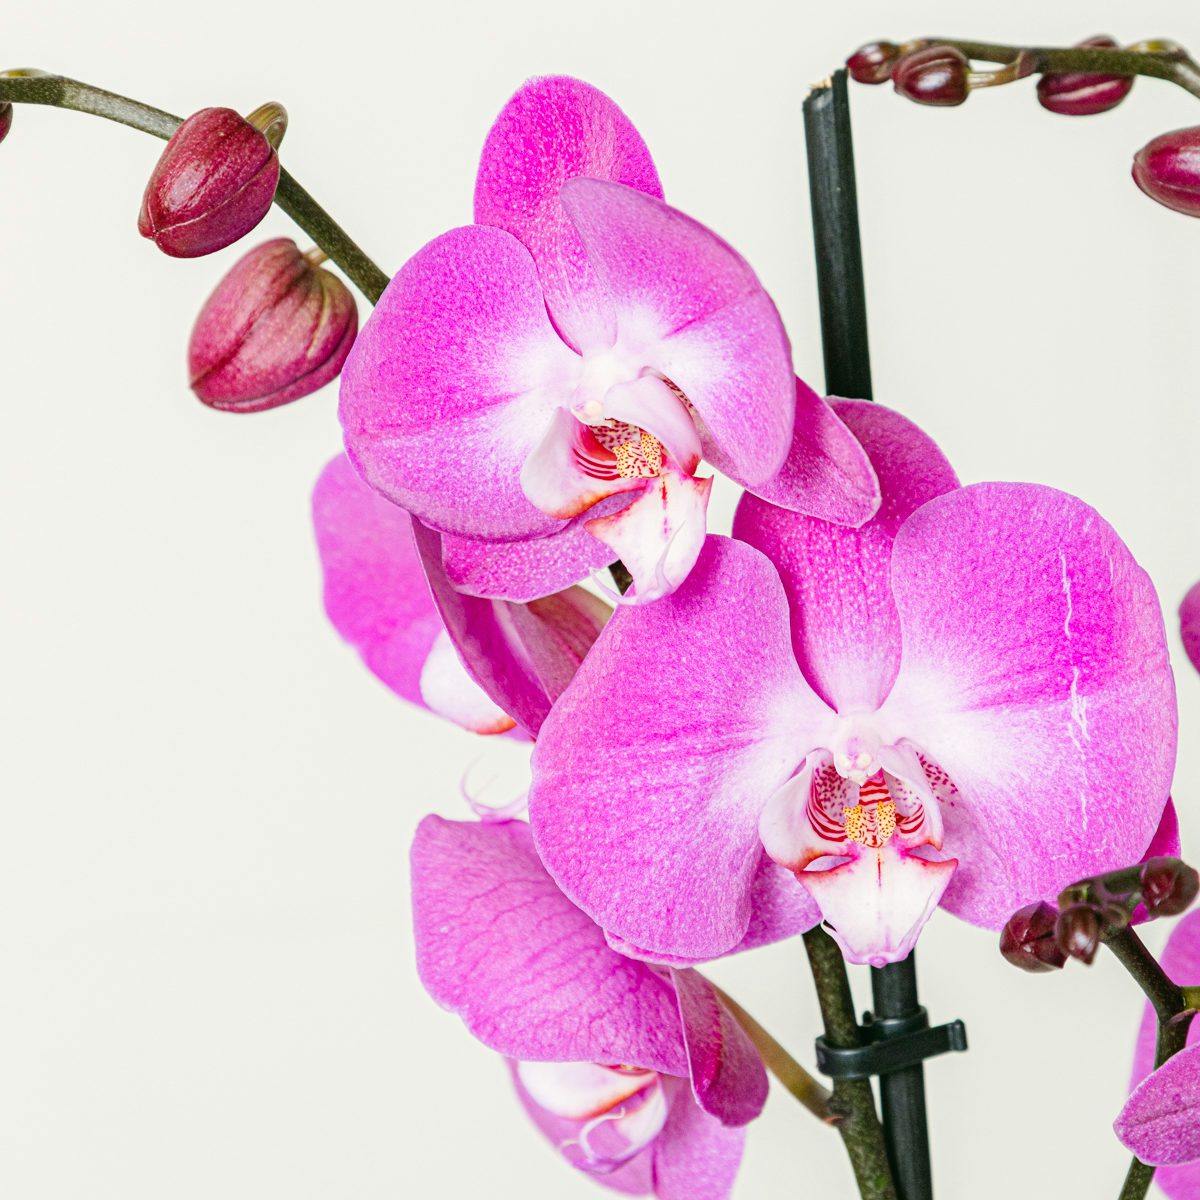 Dunkelpink Orchidee